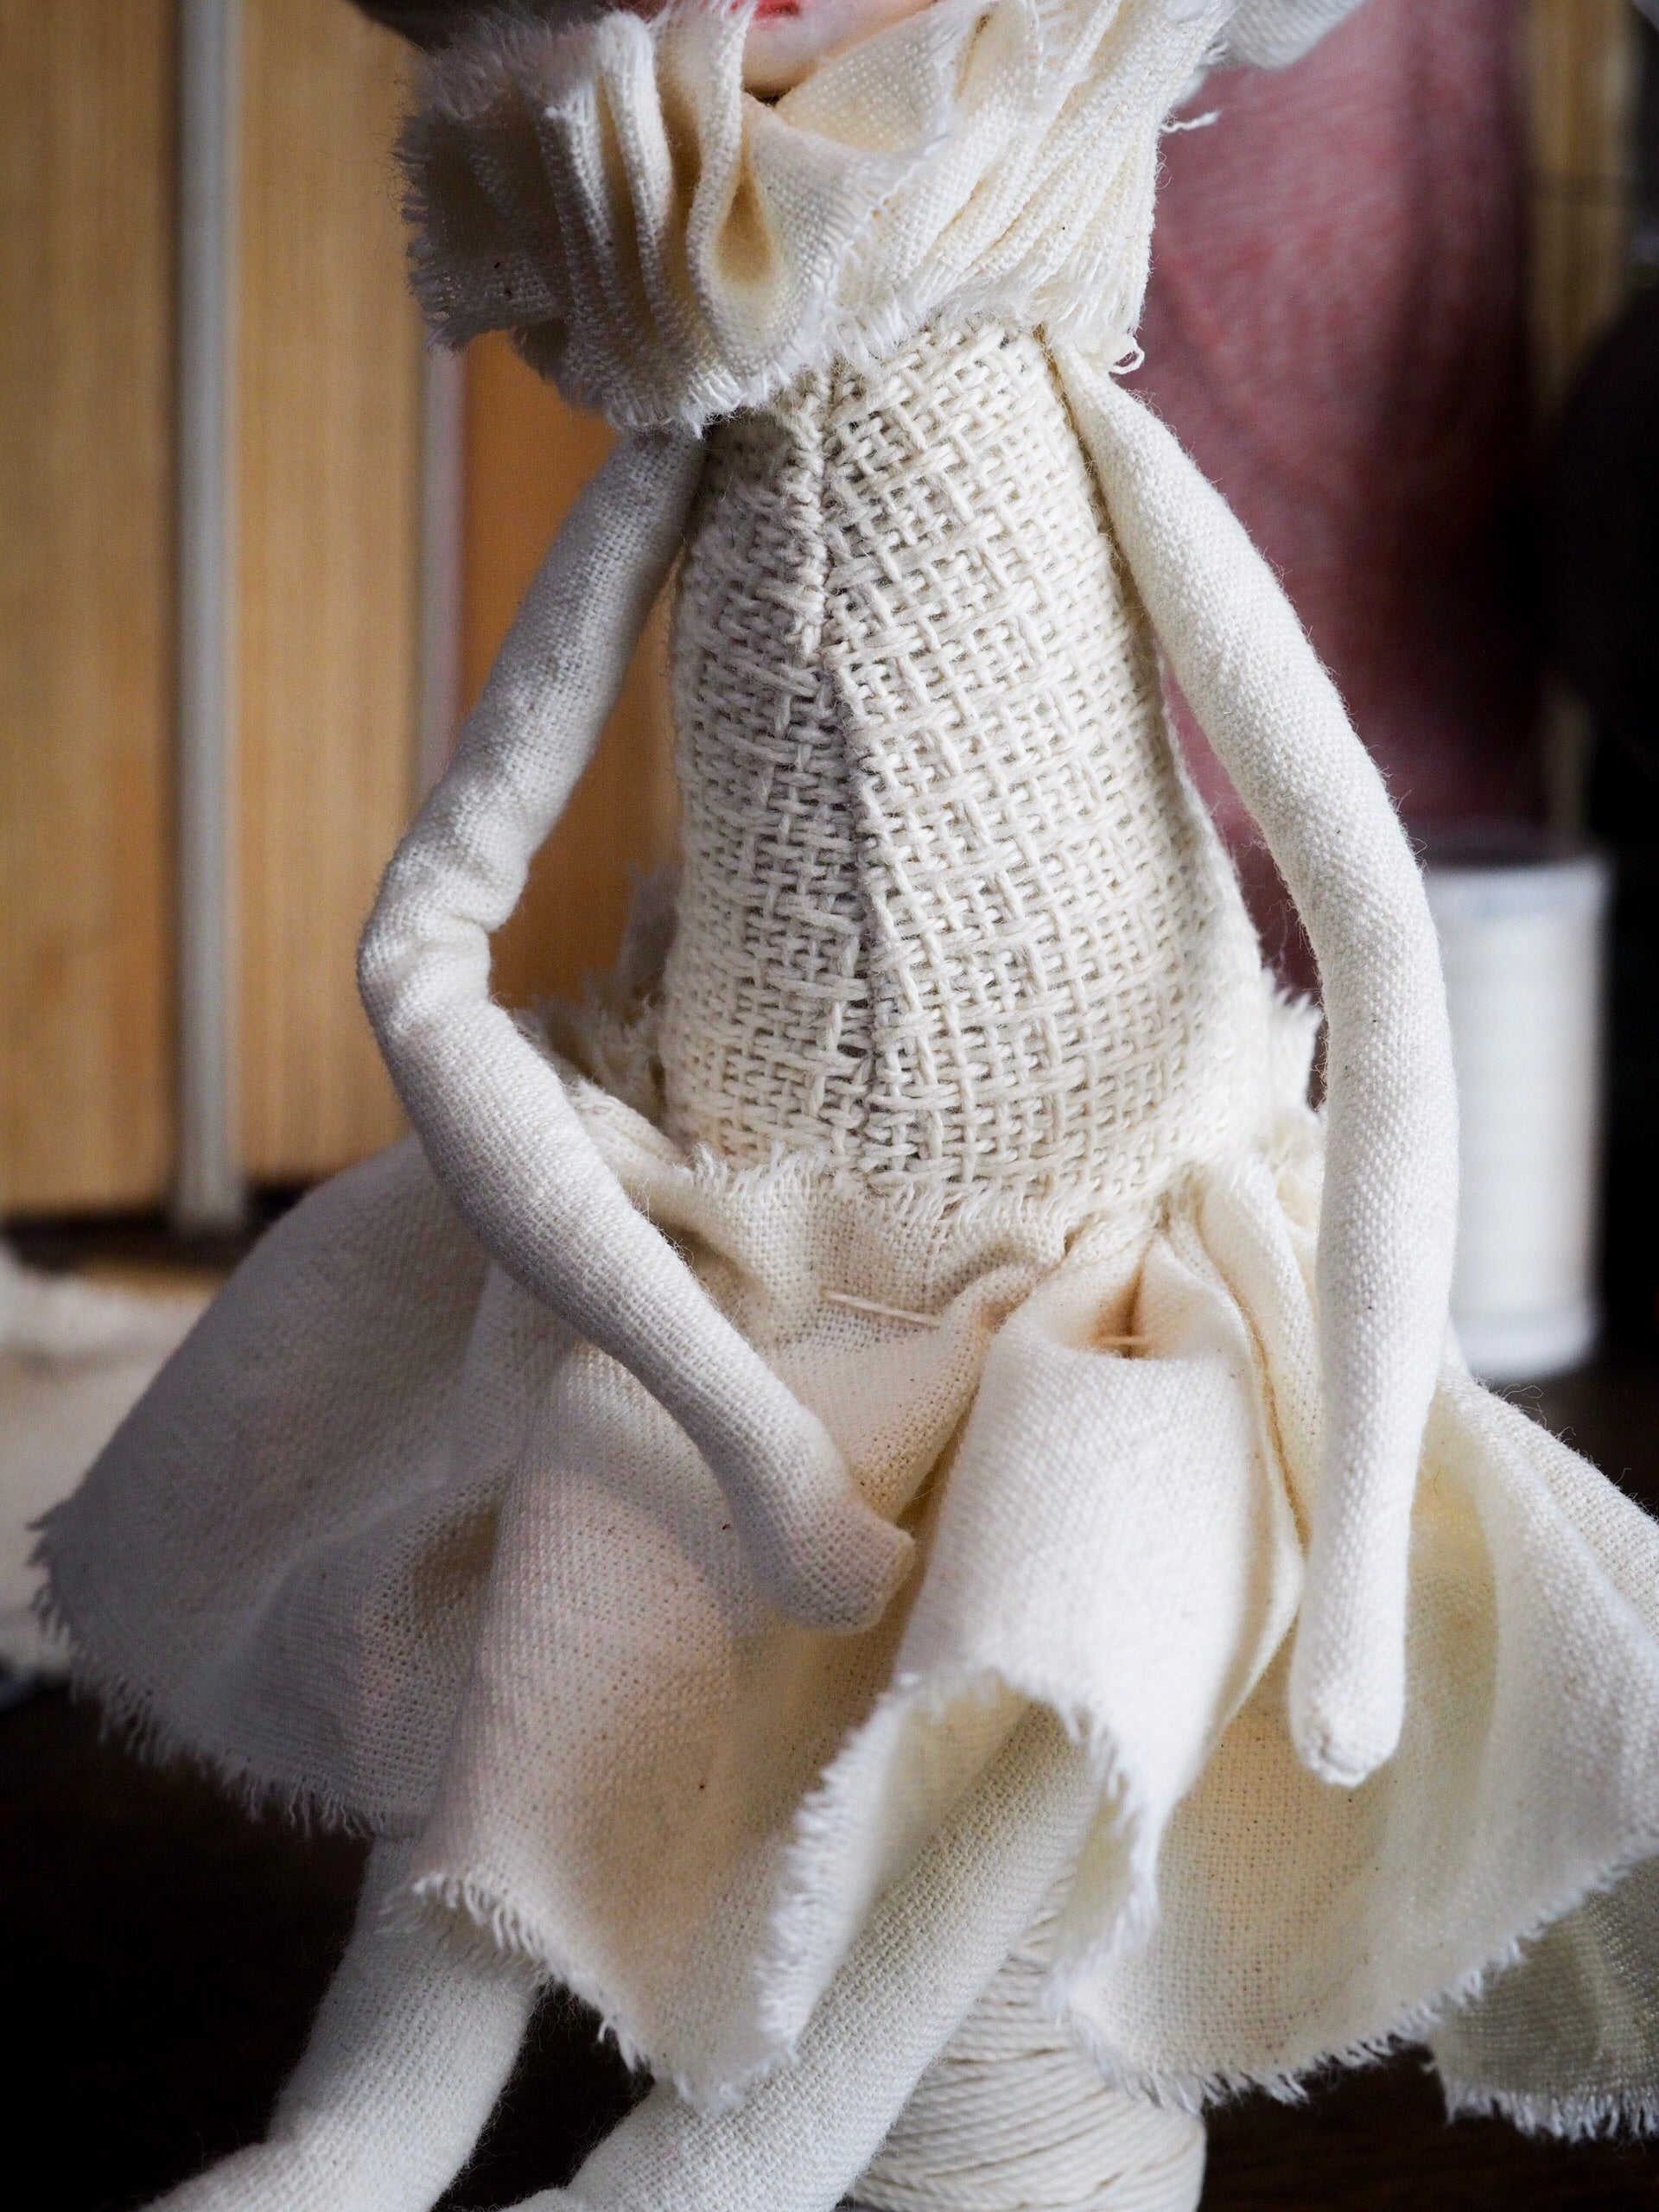 MUSHROOM SPECIMEN N. 7 - Original woodlands handmade art doll by Danita Art, Art Doll by Danita Art